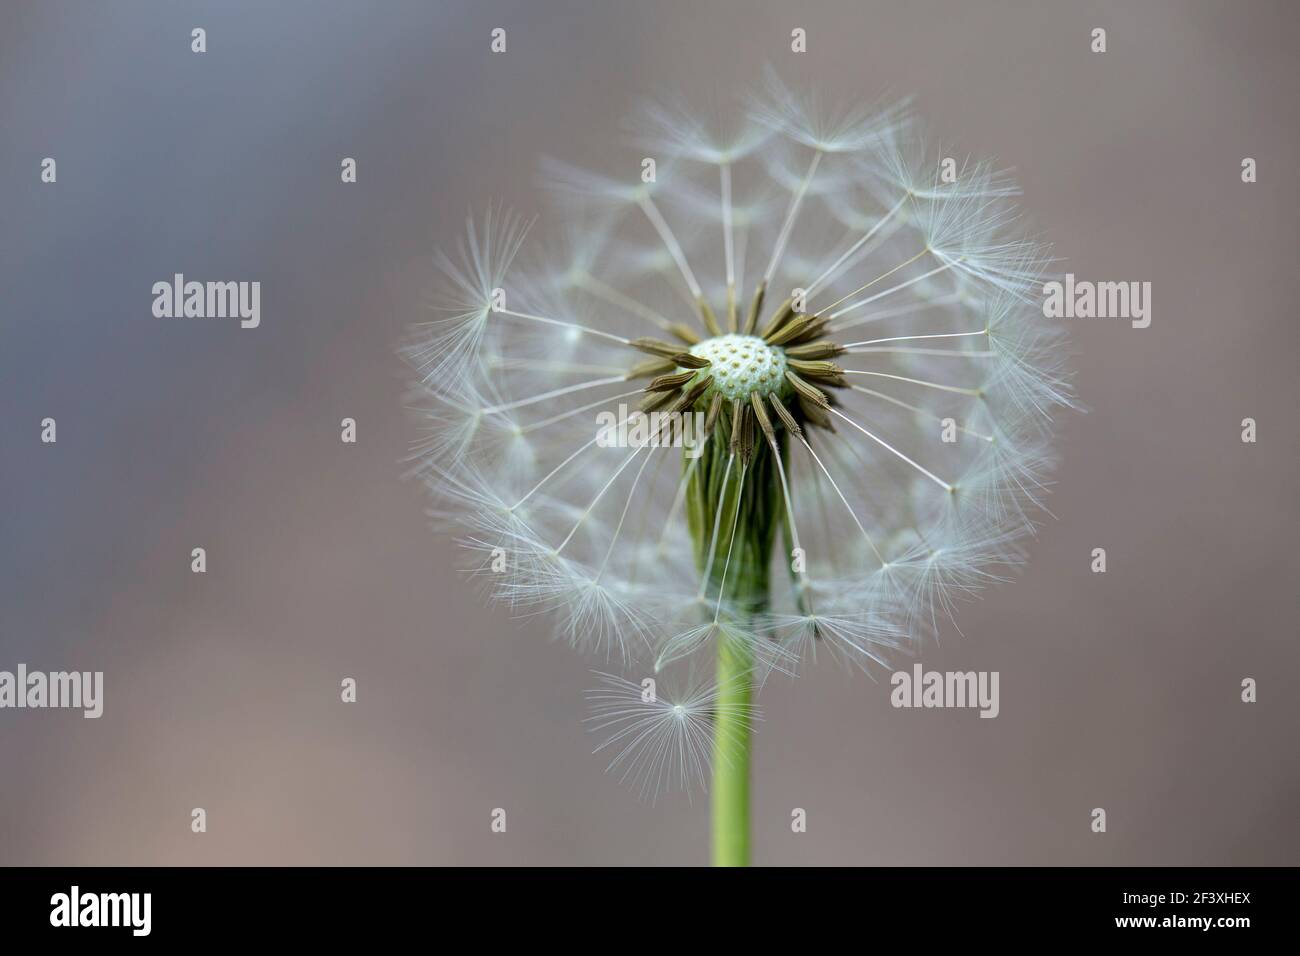 Dandelion seedhead in close-up Stock Photo